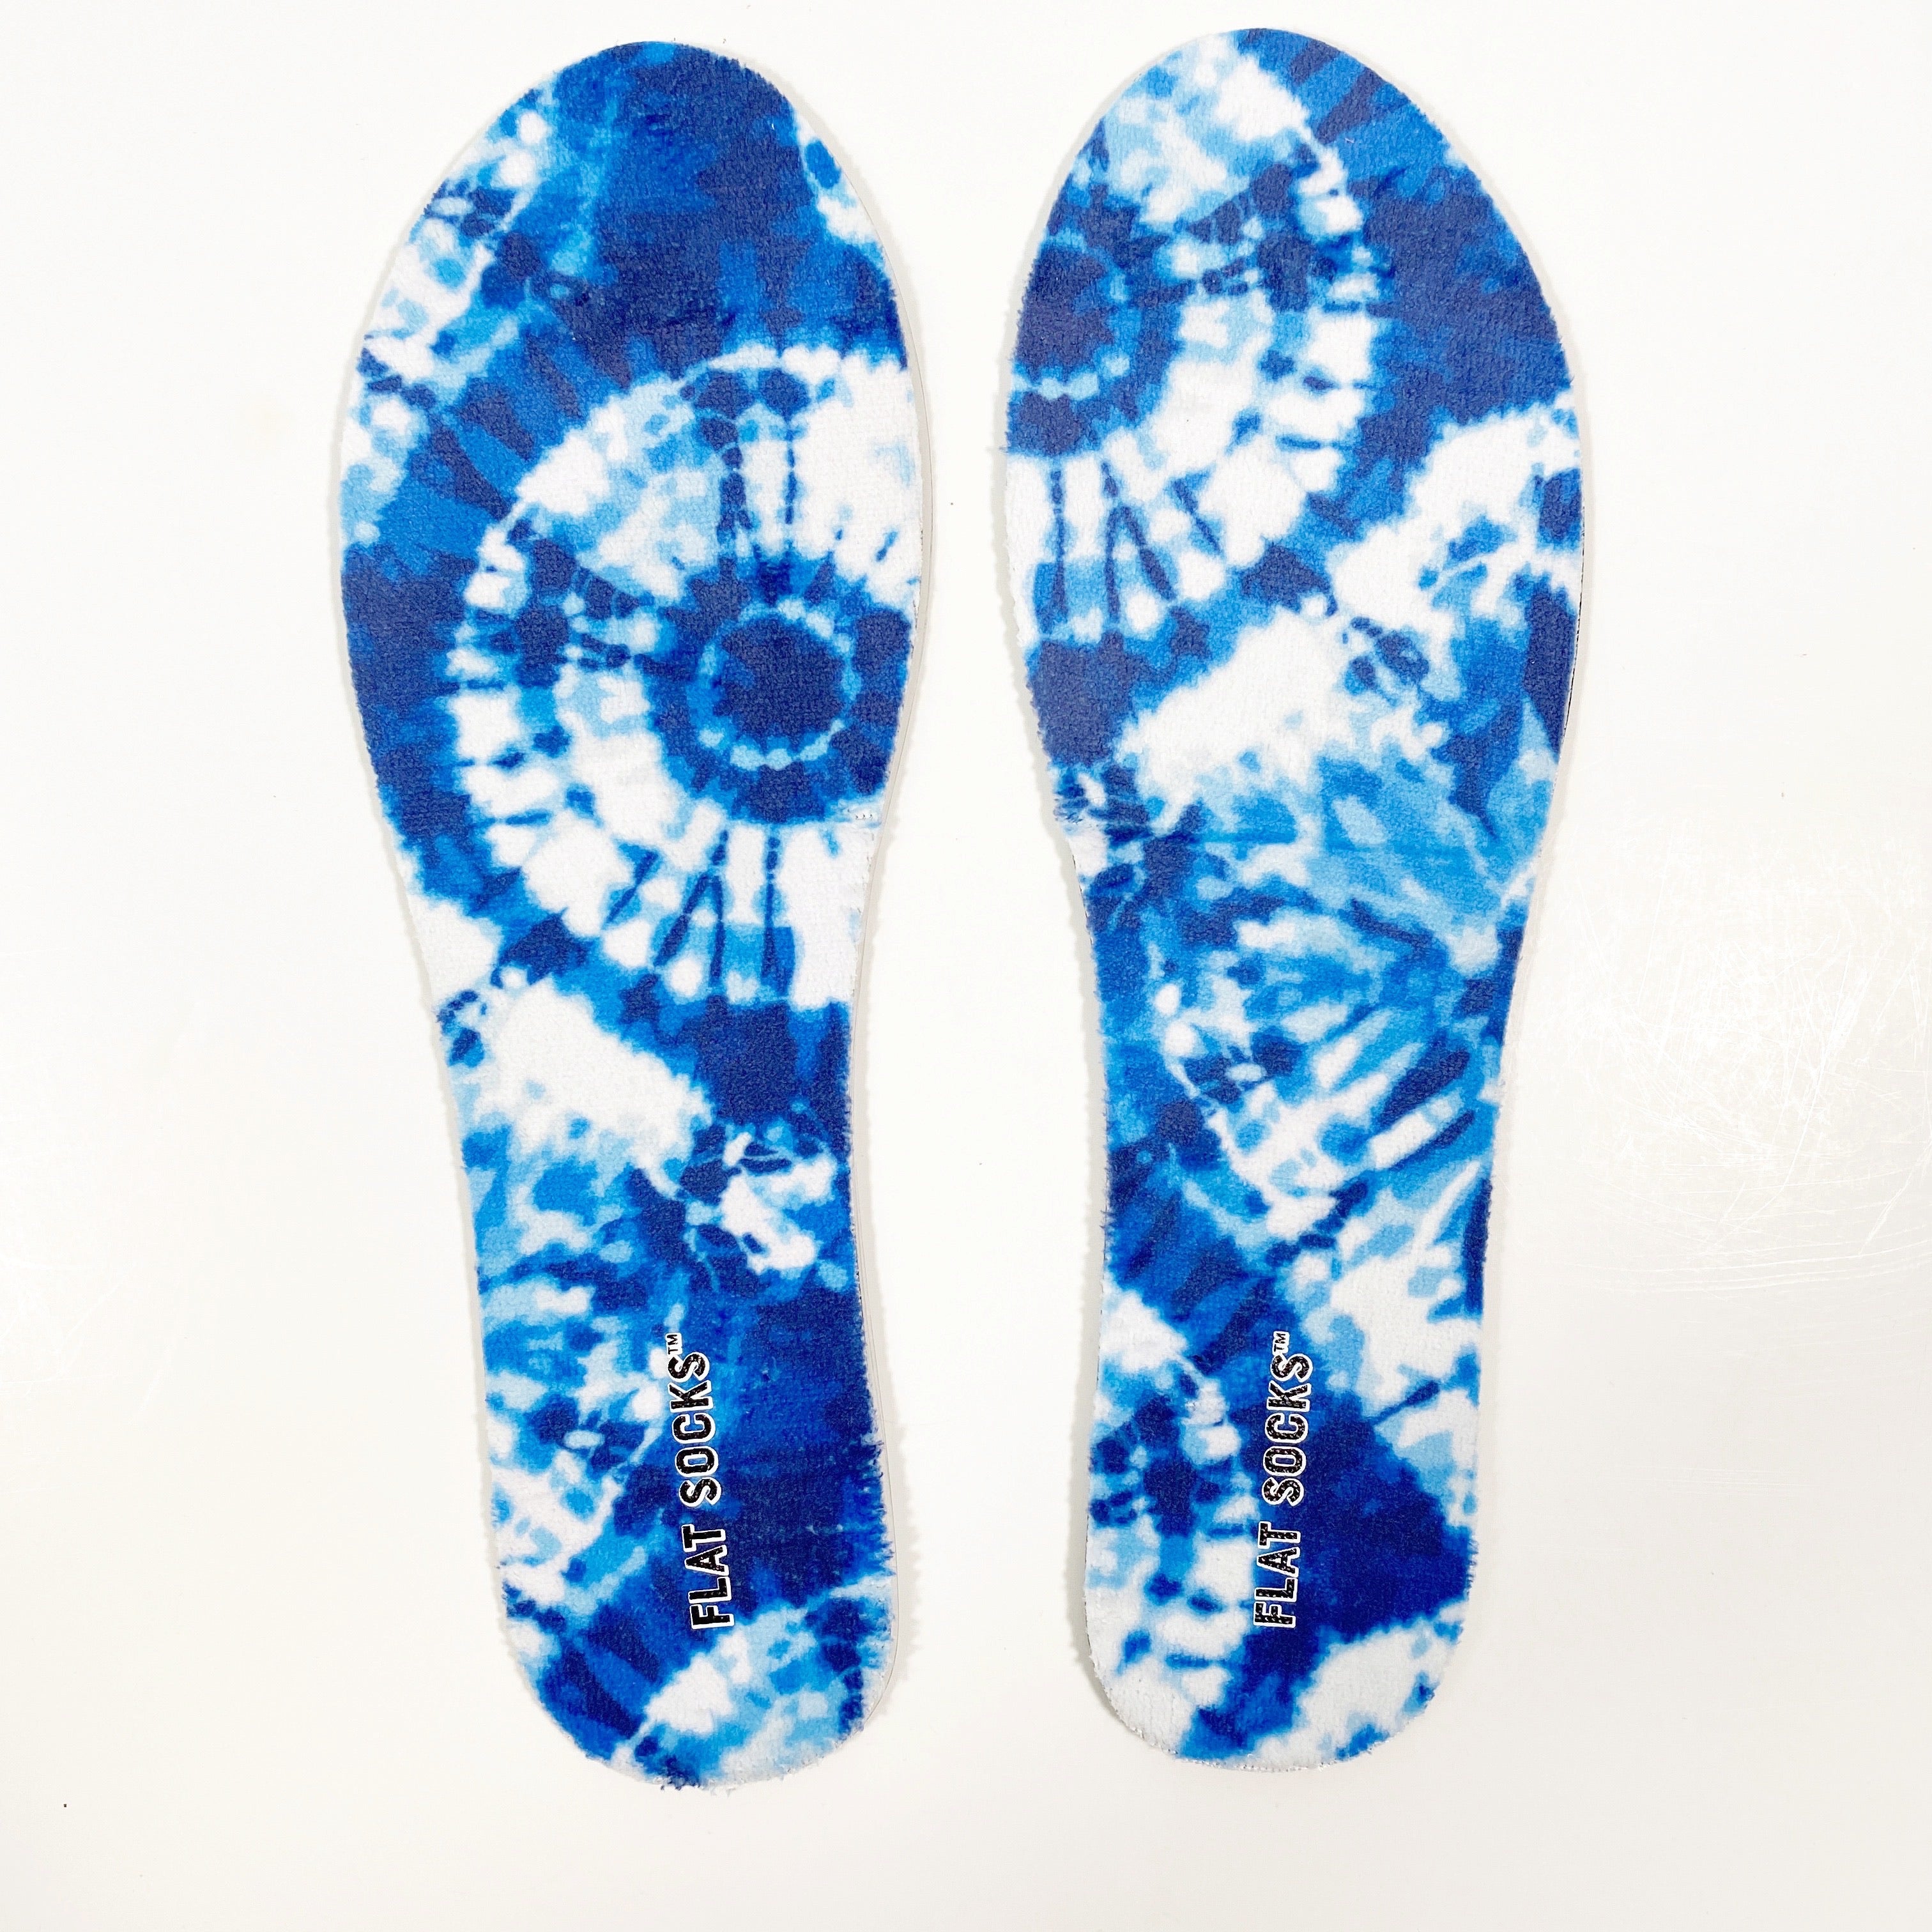 Terry Flat Socks - Blue Tie Dye - The Storehouse Flats